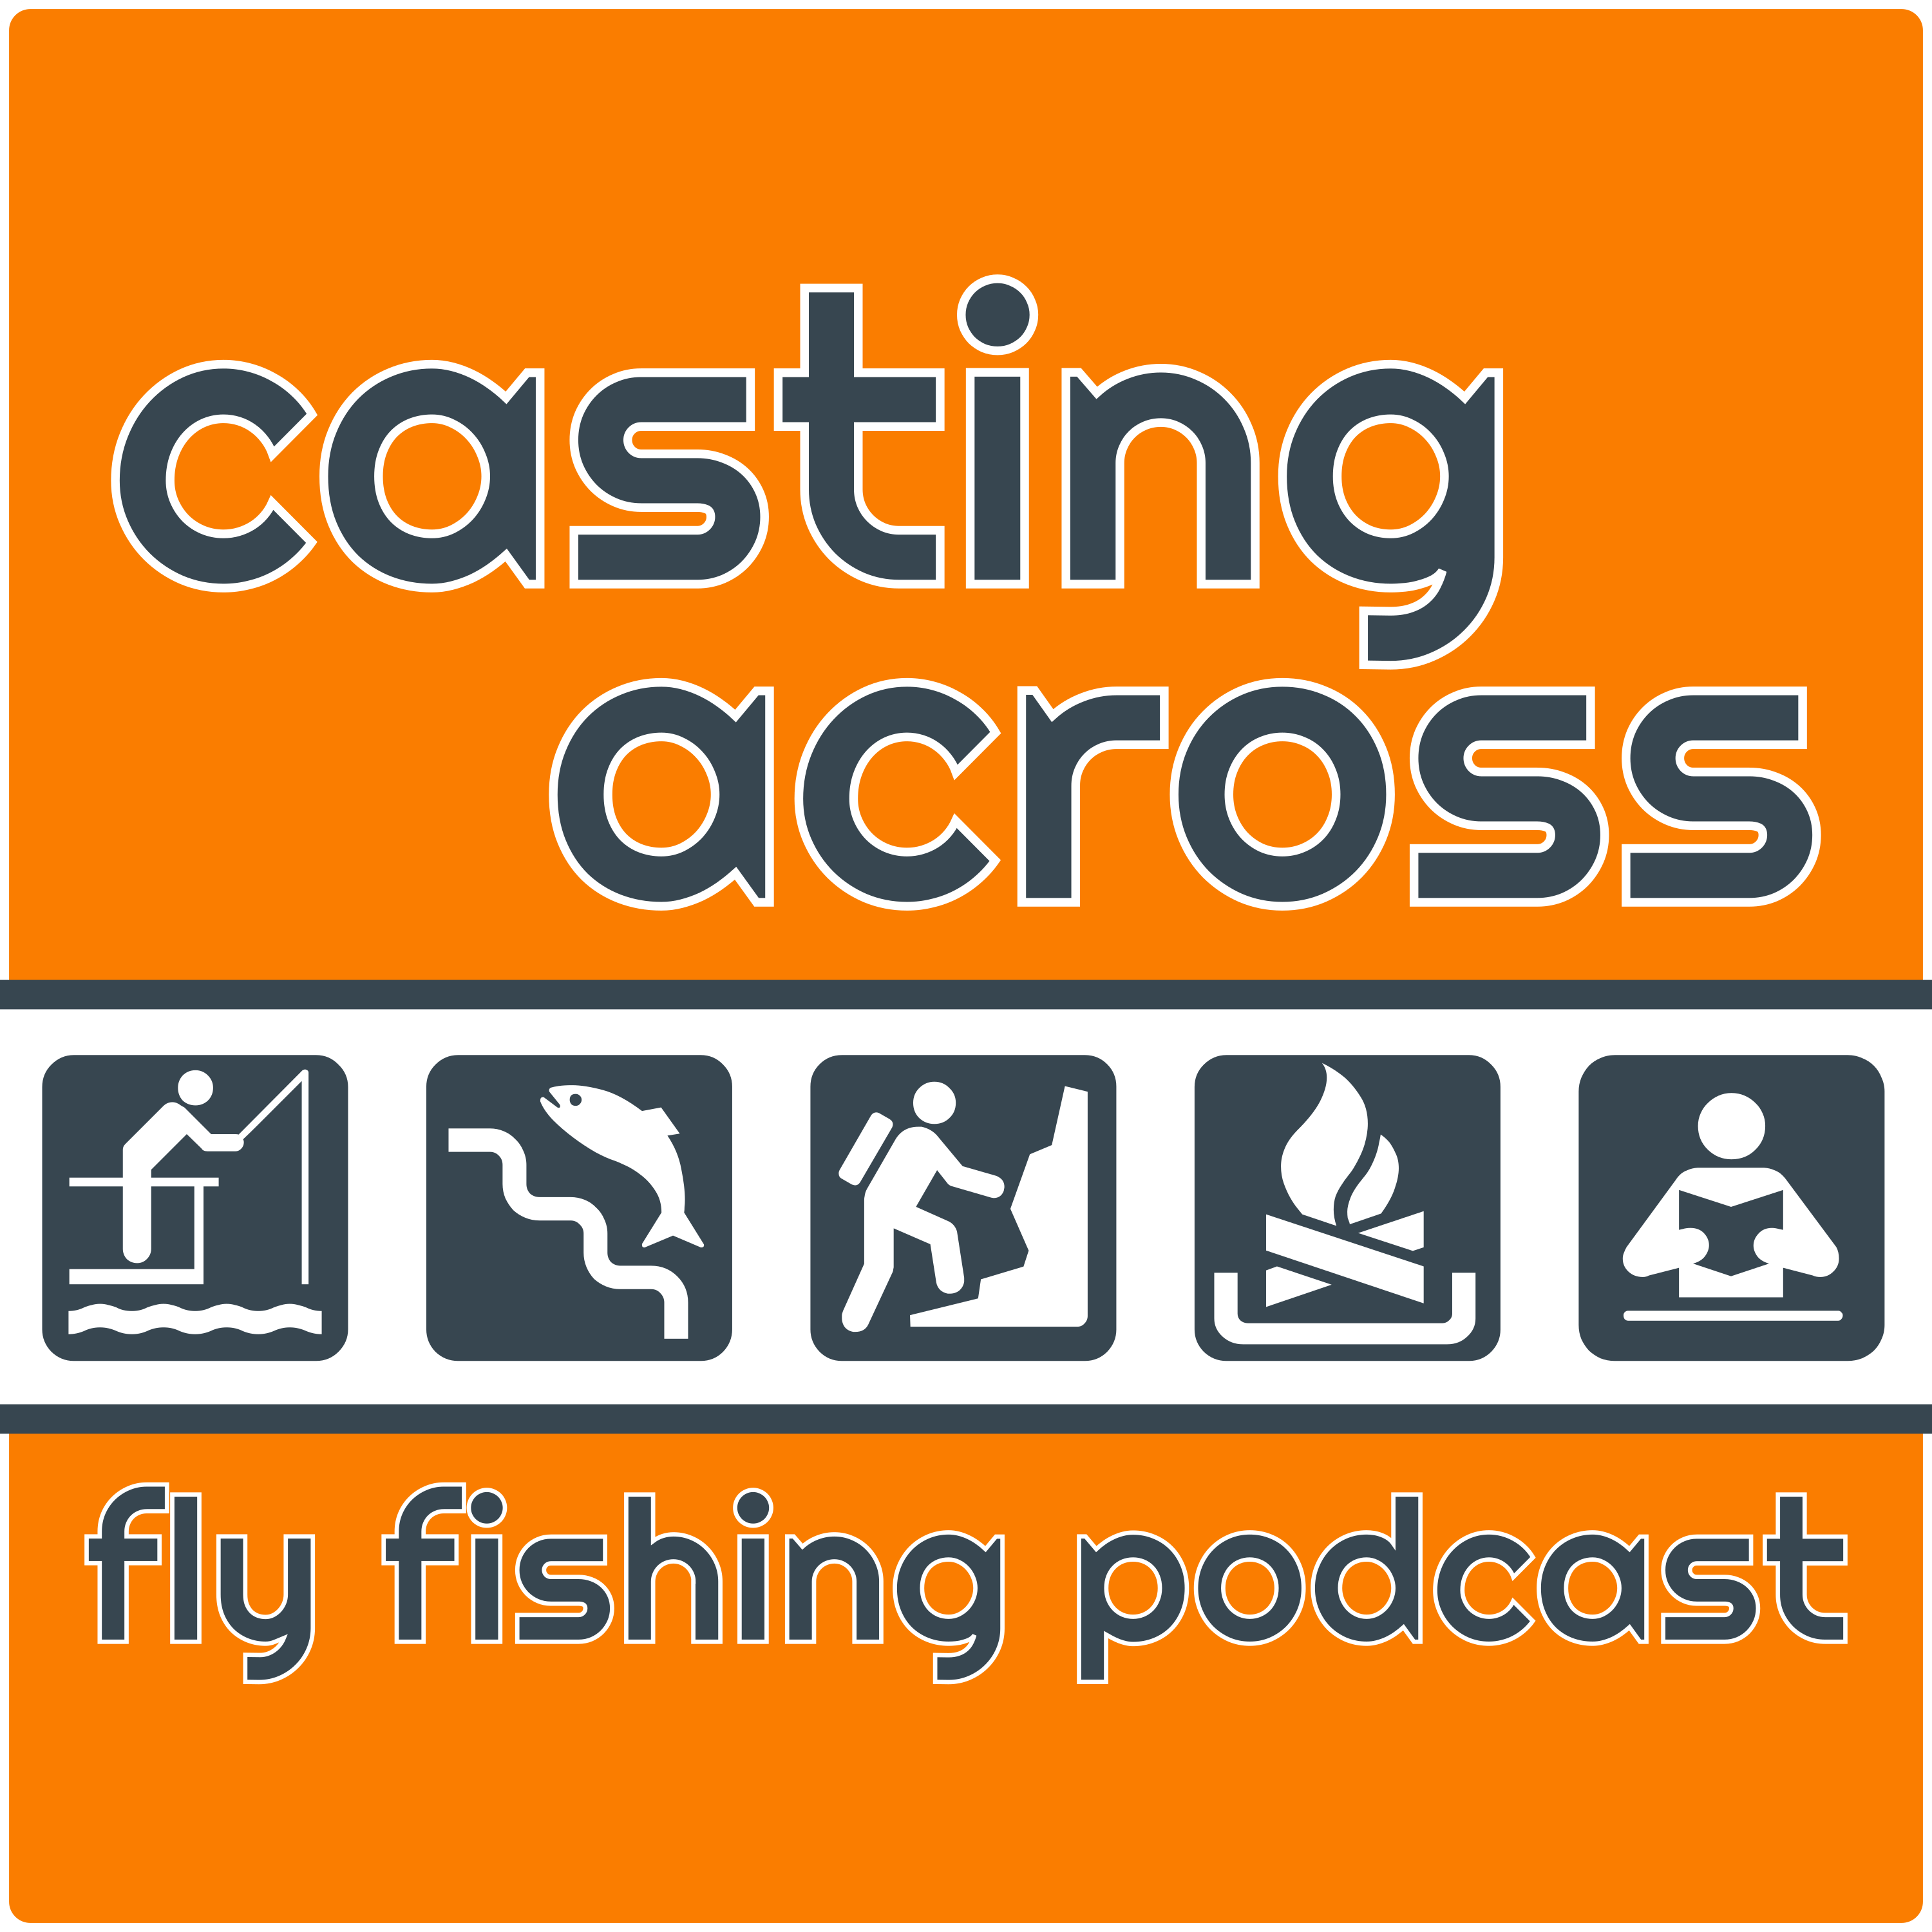 Storing Fishing Gear, part 2